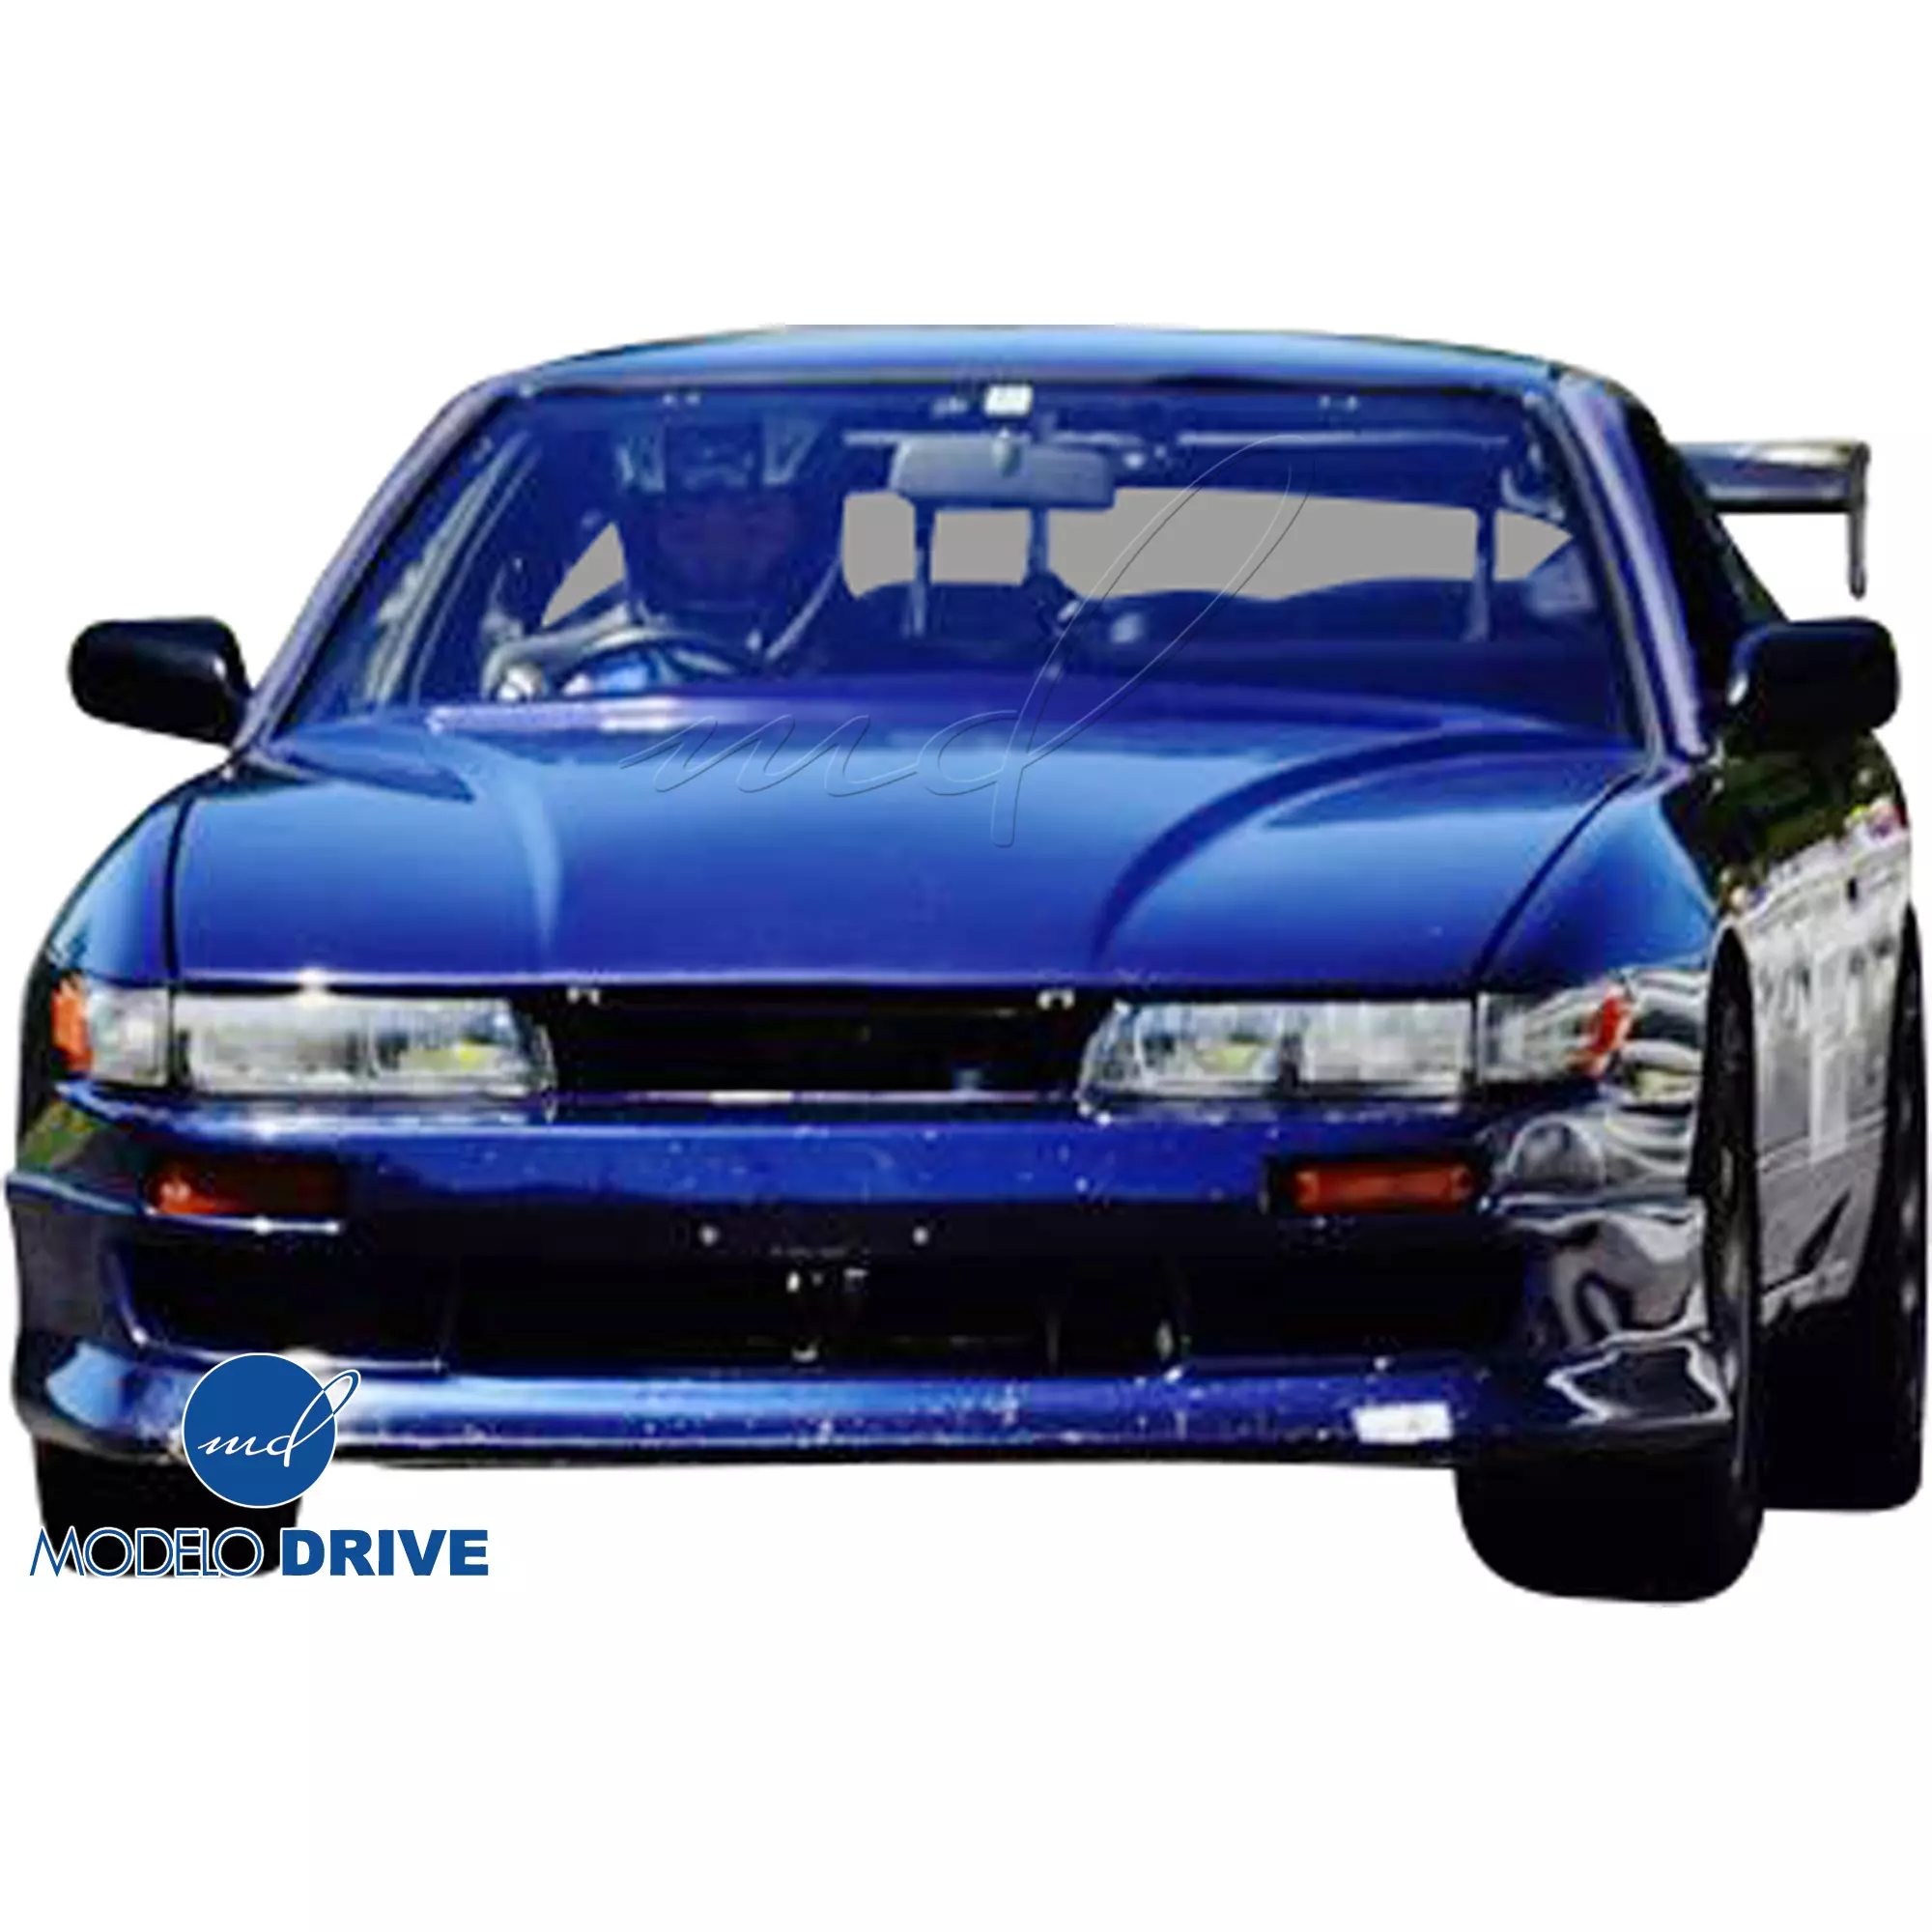 ModeloDrive FRP ORI v2 Hood > Nissan Silvia S13 1989-1994 - Image 34